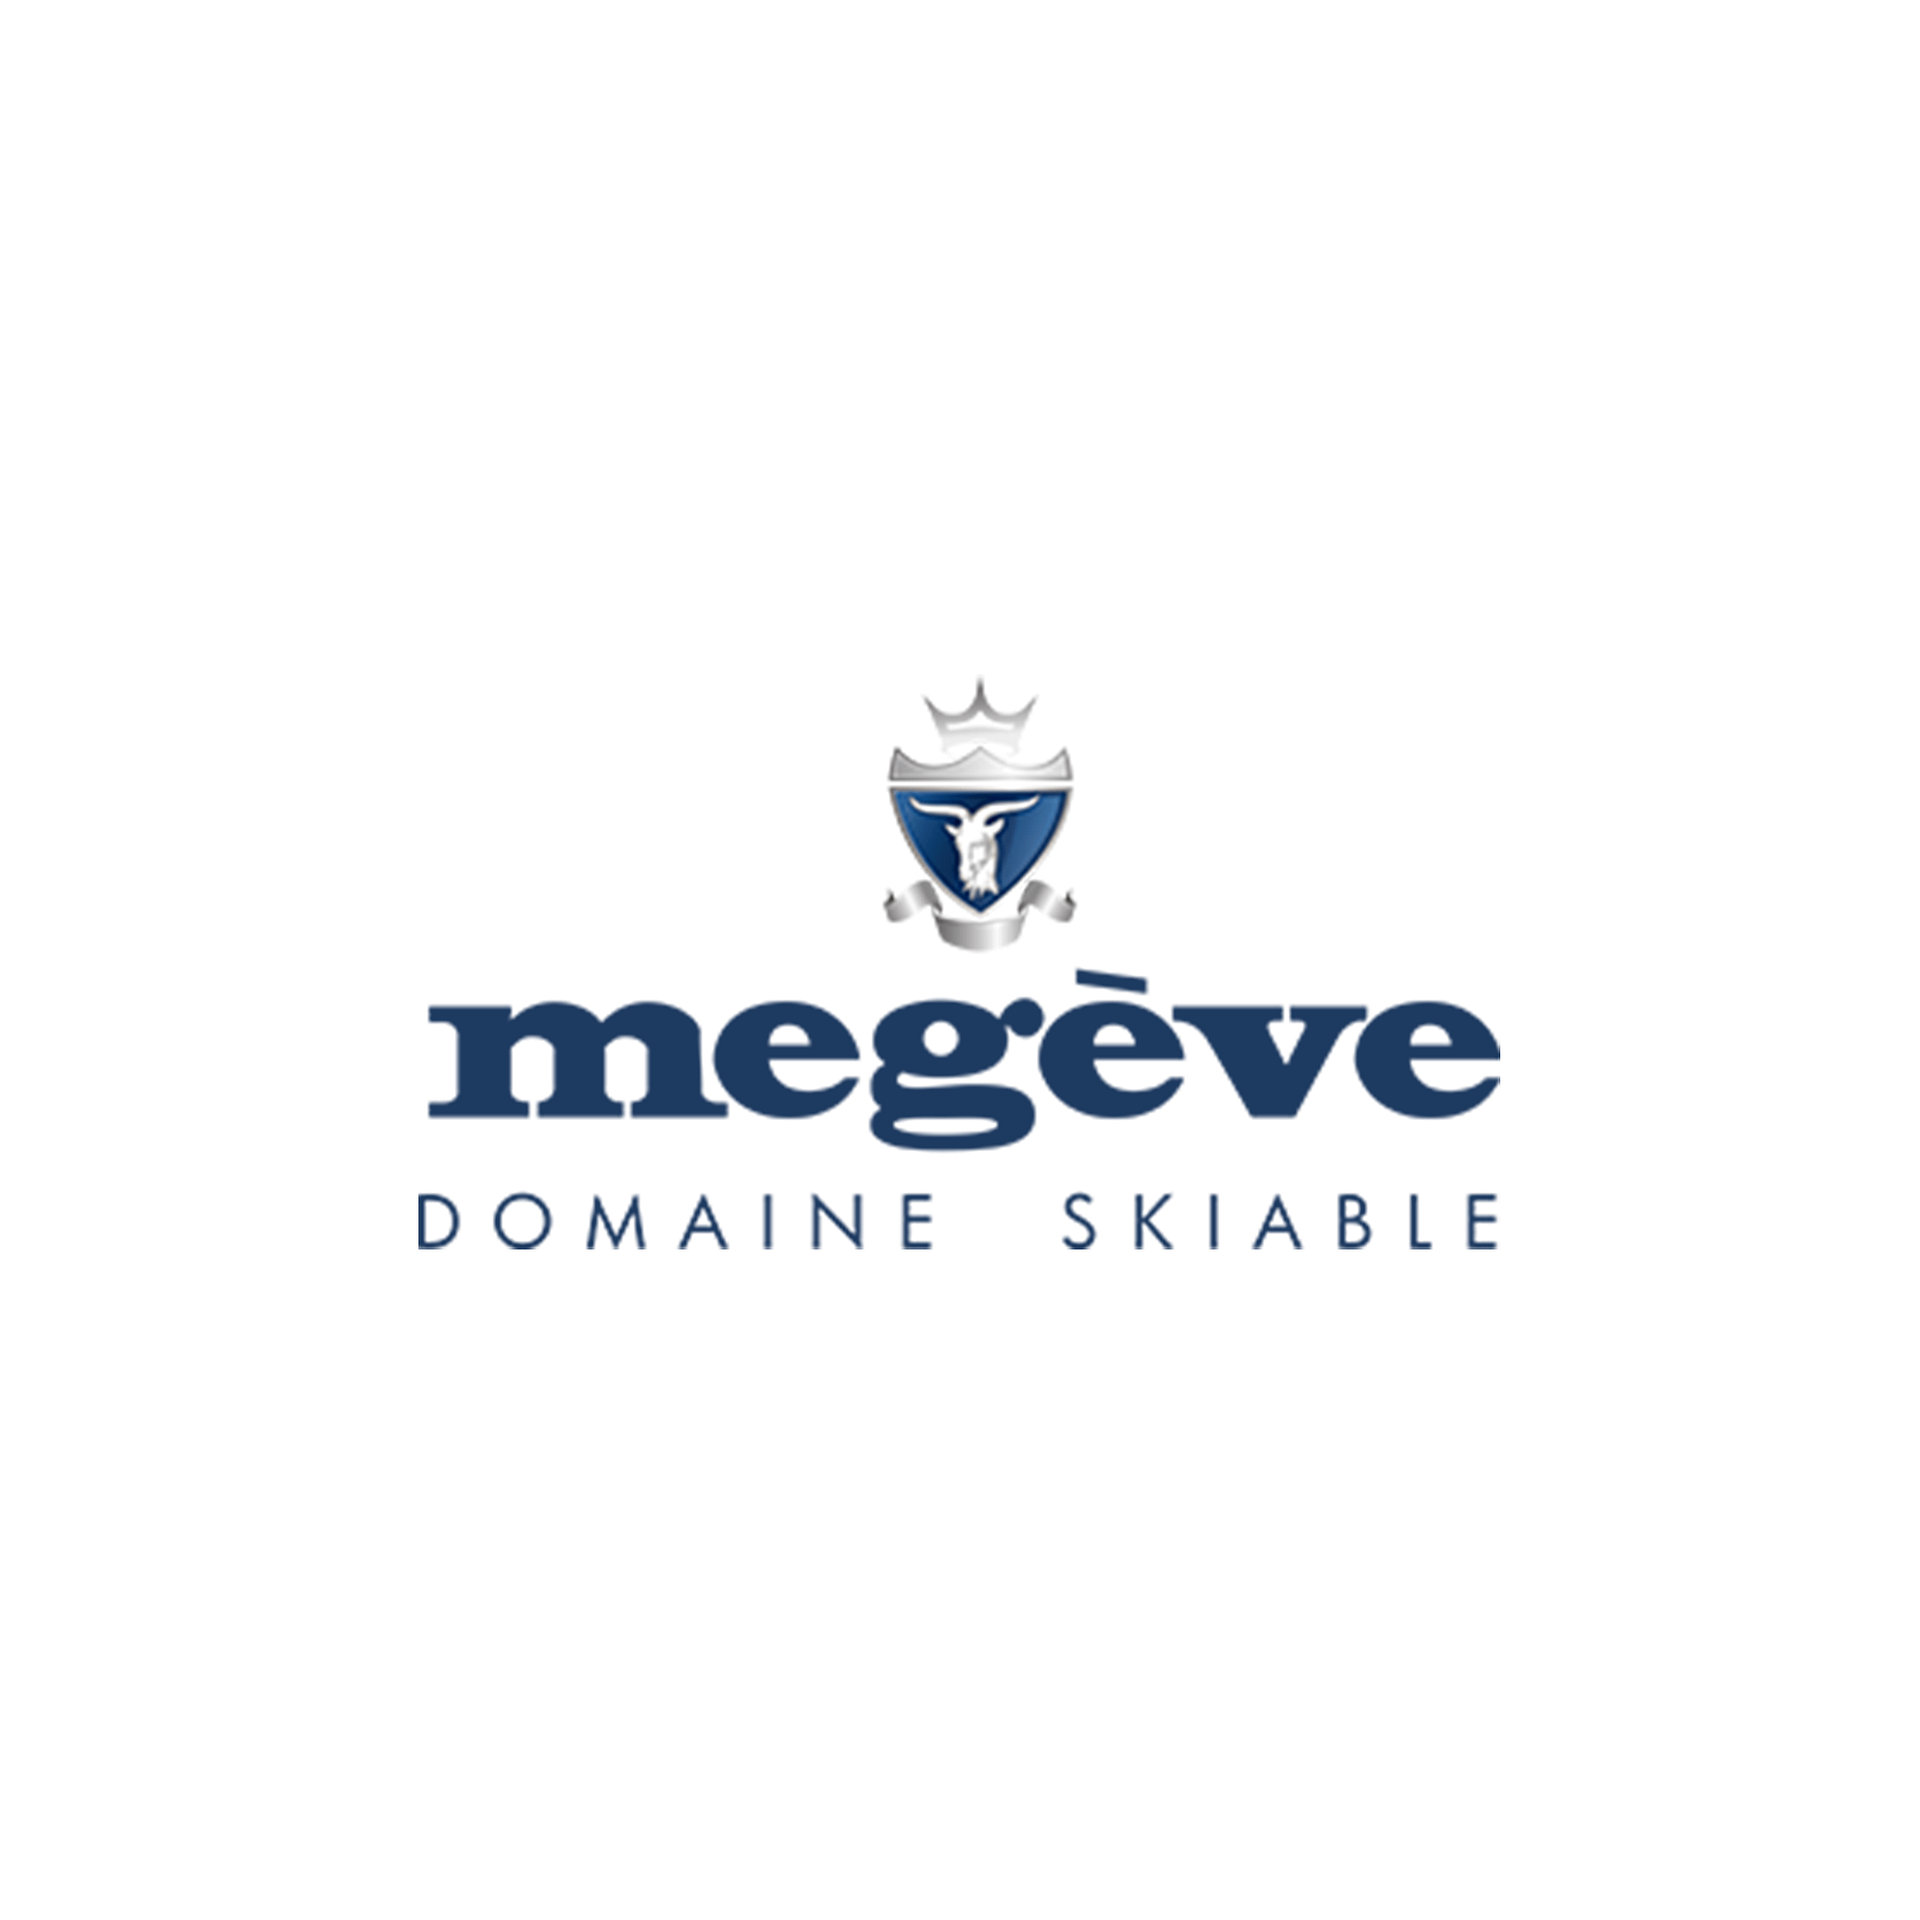 megeve-domaine-skiable-logo